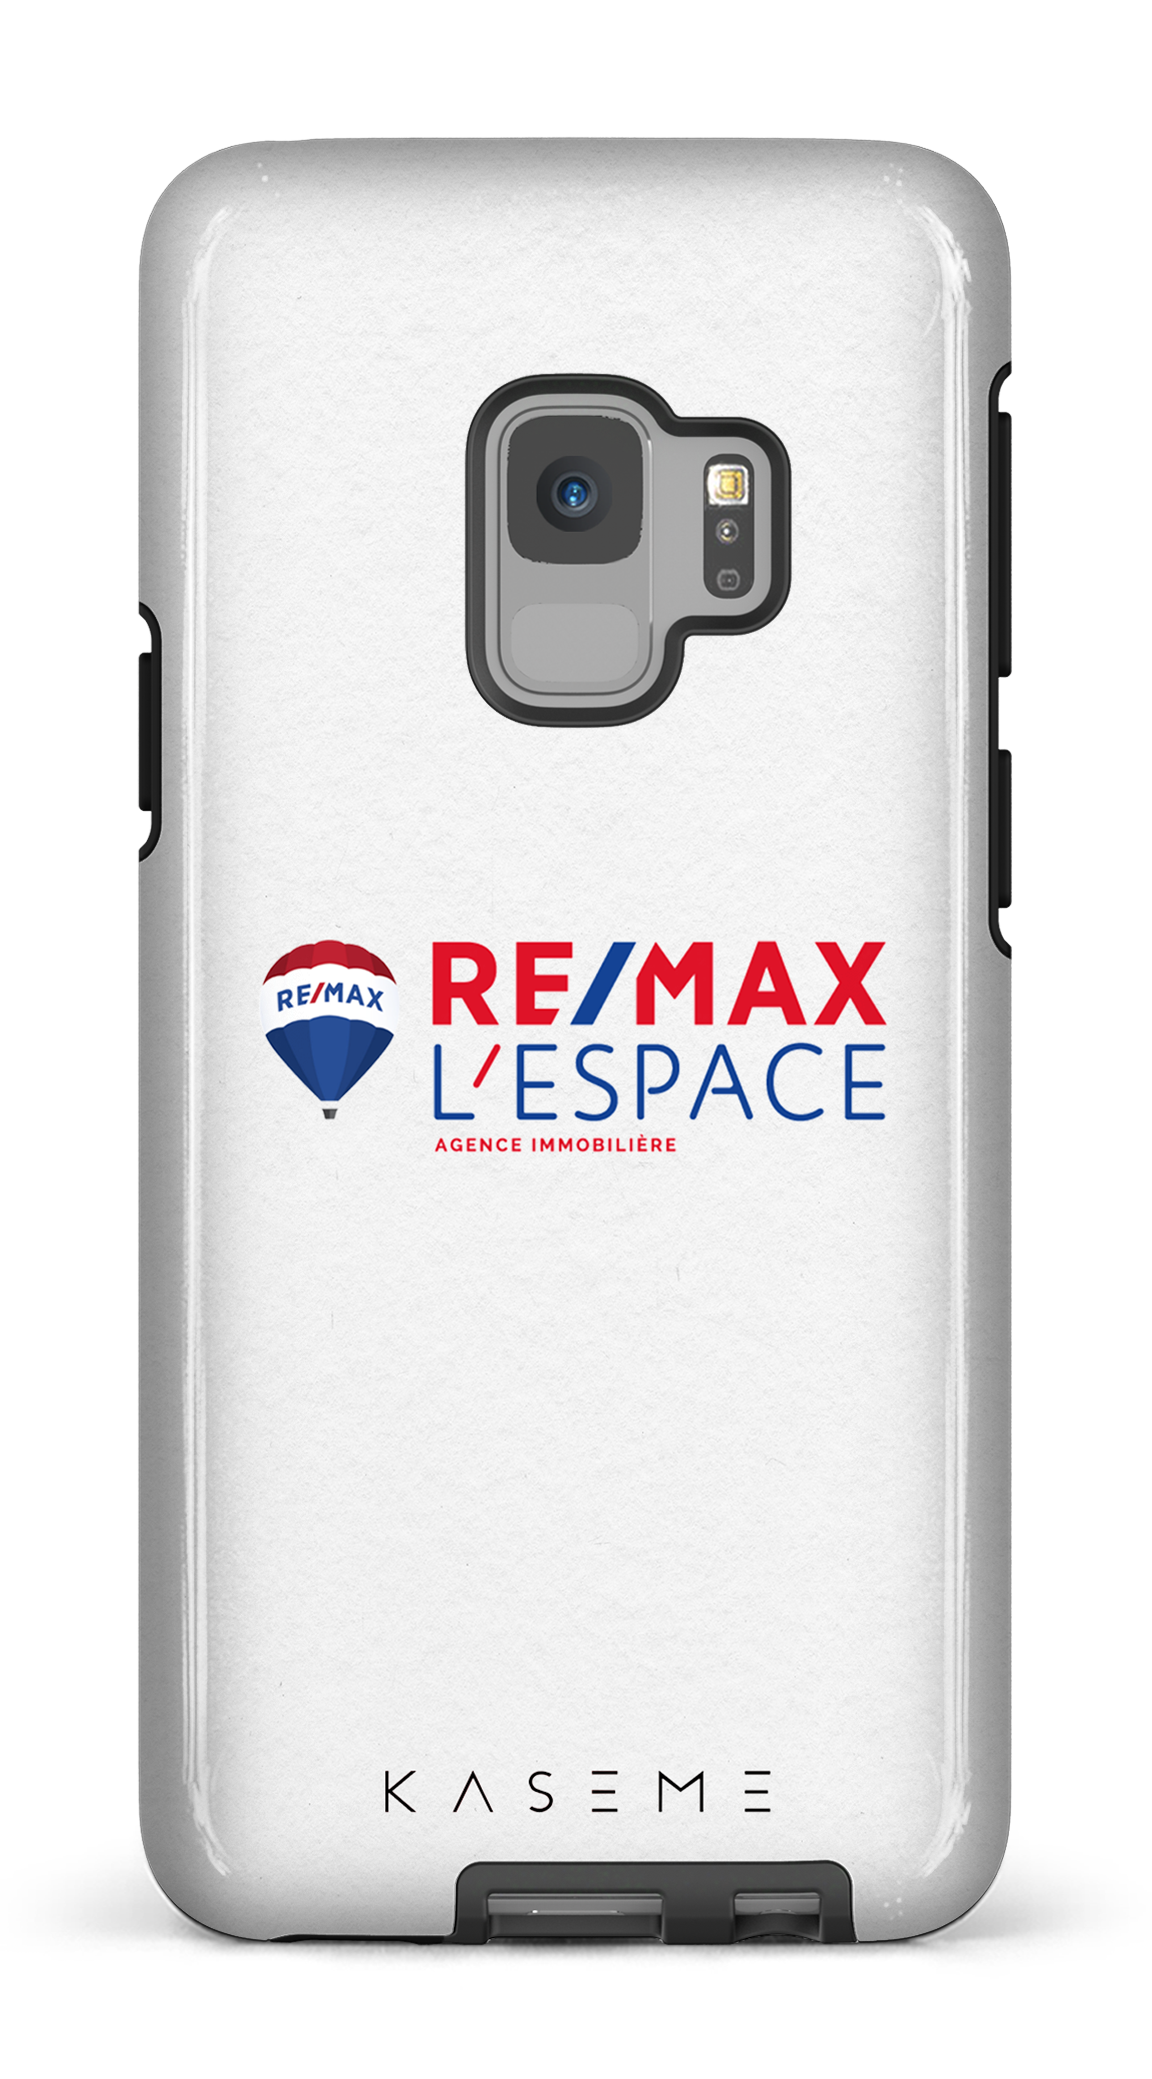 Remax L'Espace Blanc - Galaxy S9